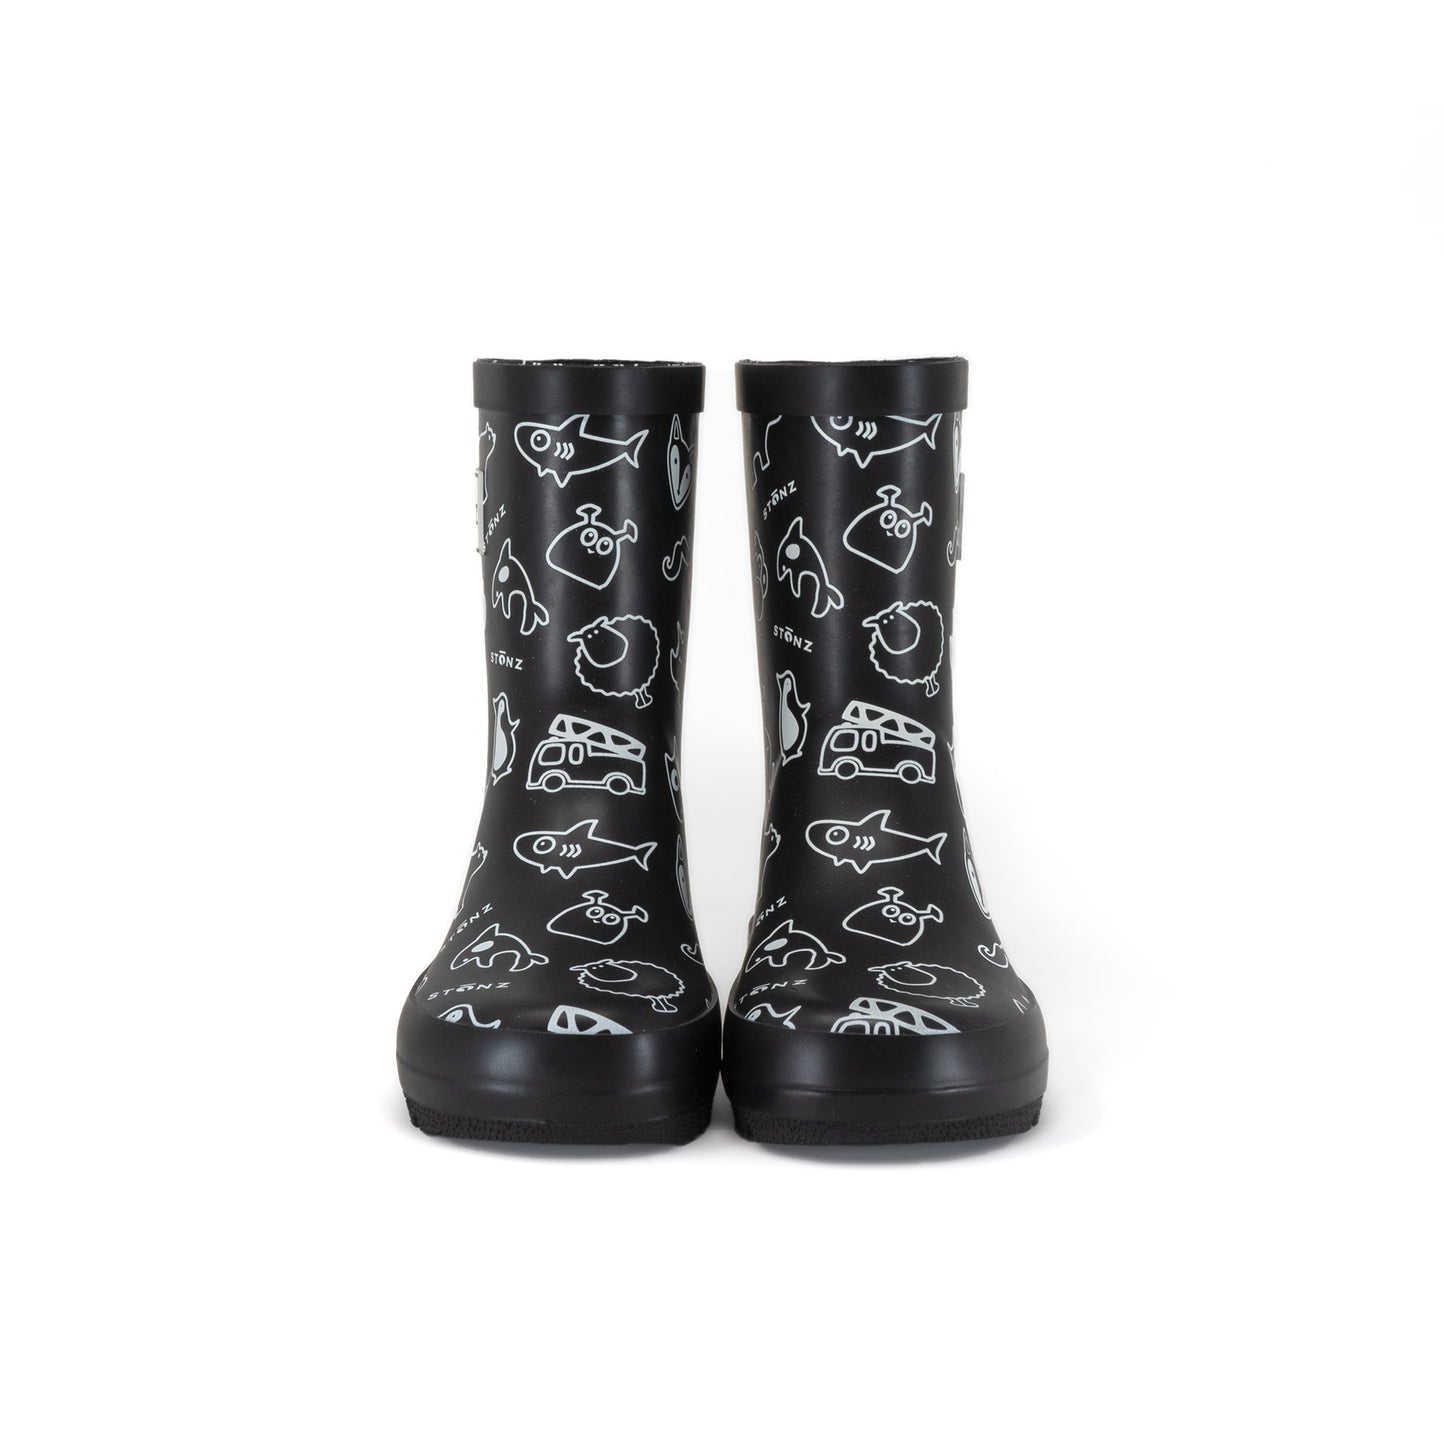 Kid's Stonz rubber Rain Boots in Black animal print